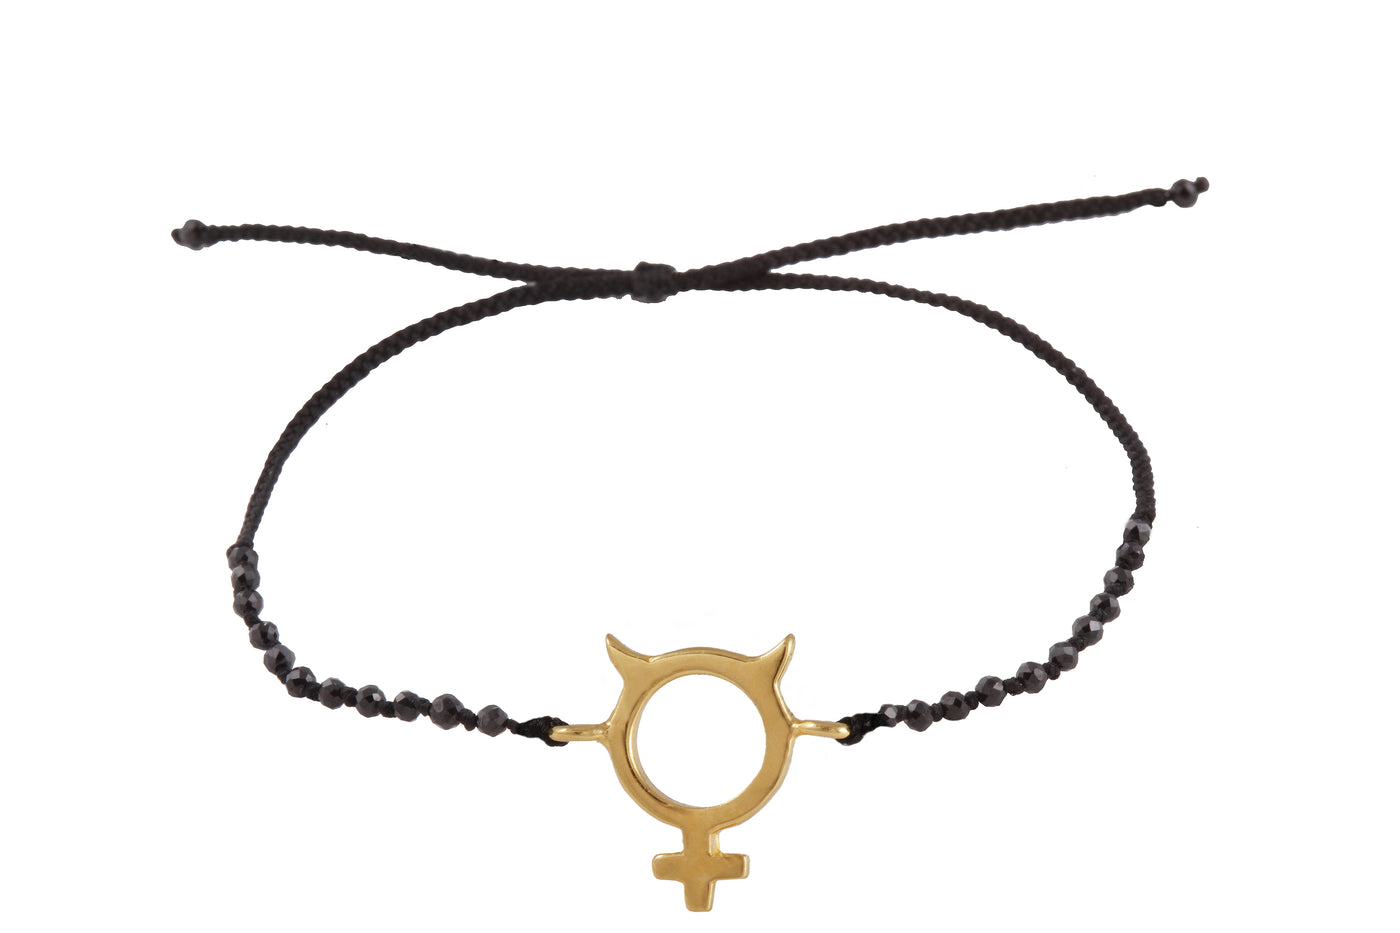 Mercury amulet bracelet with beads. Gold plated